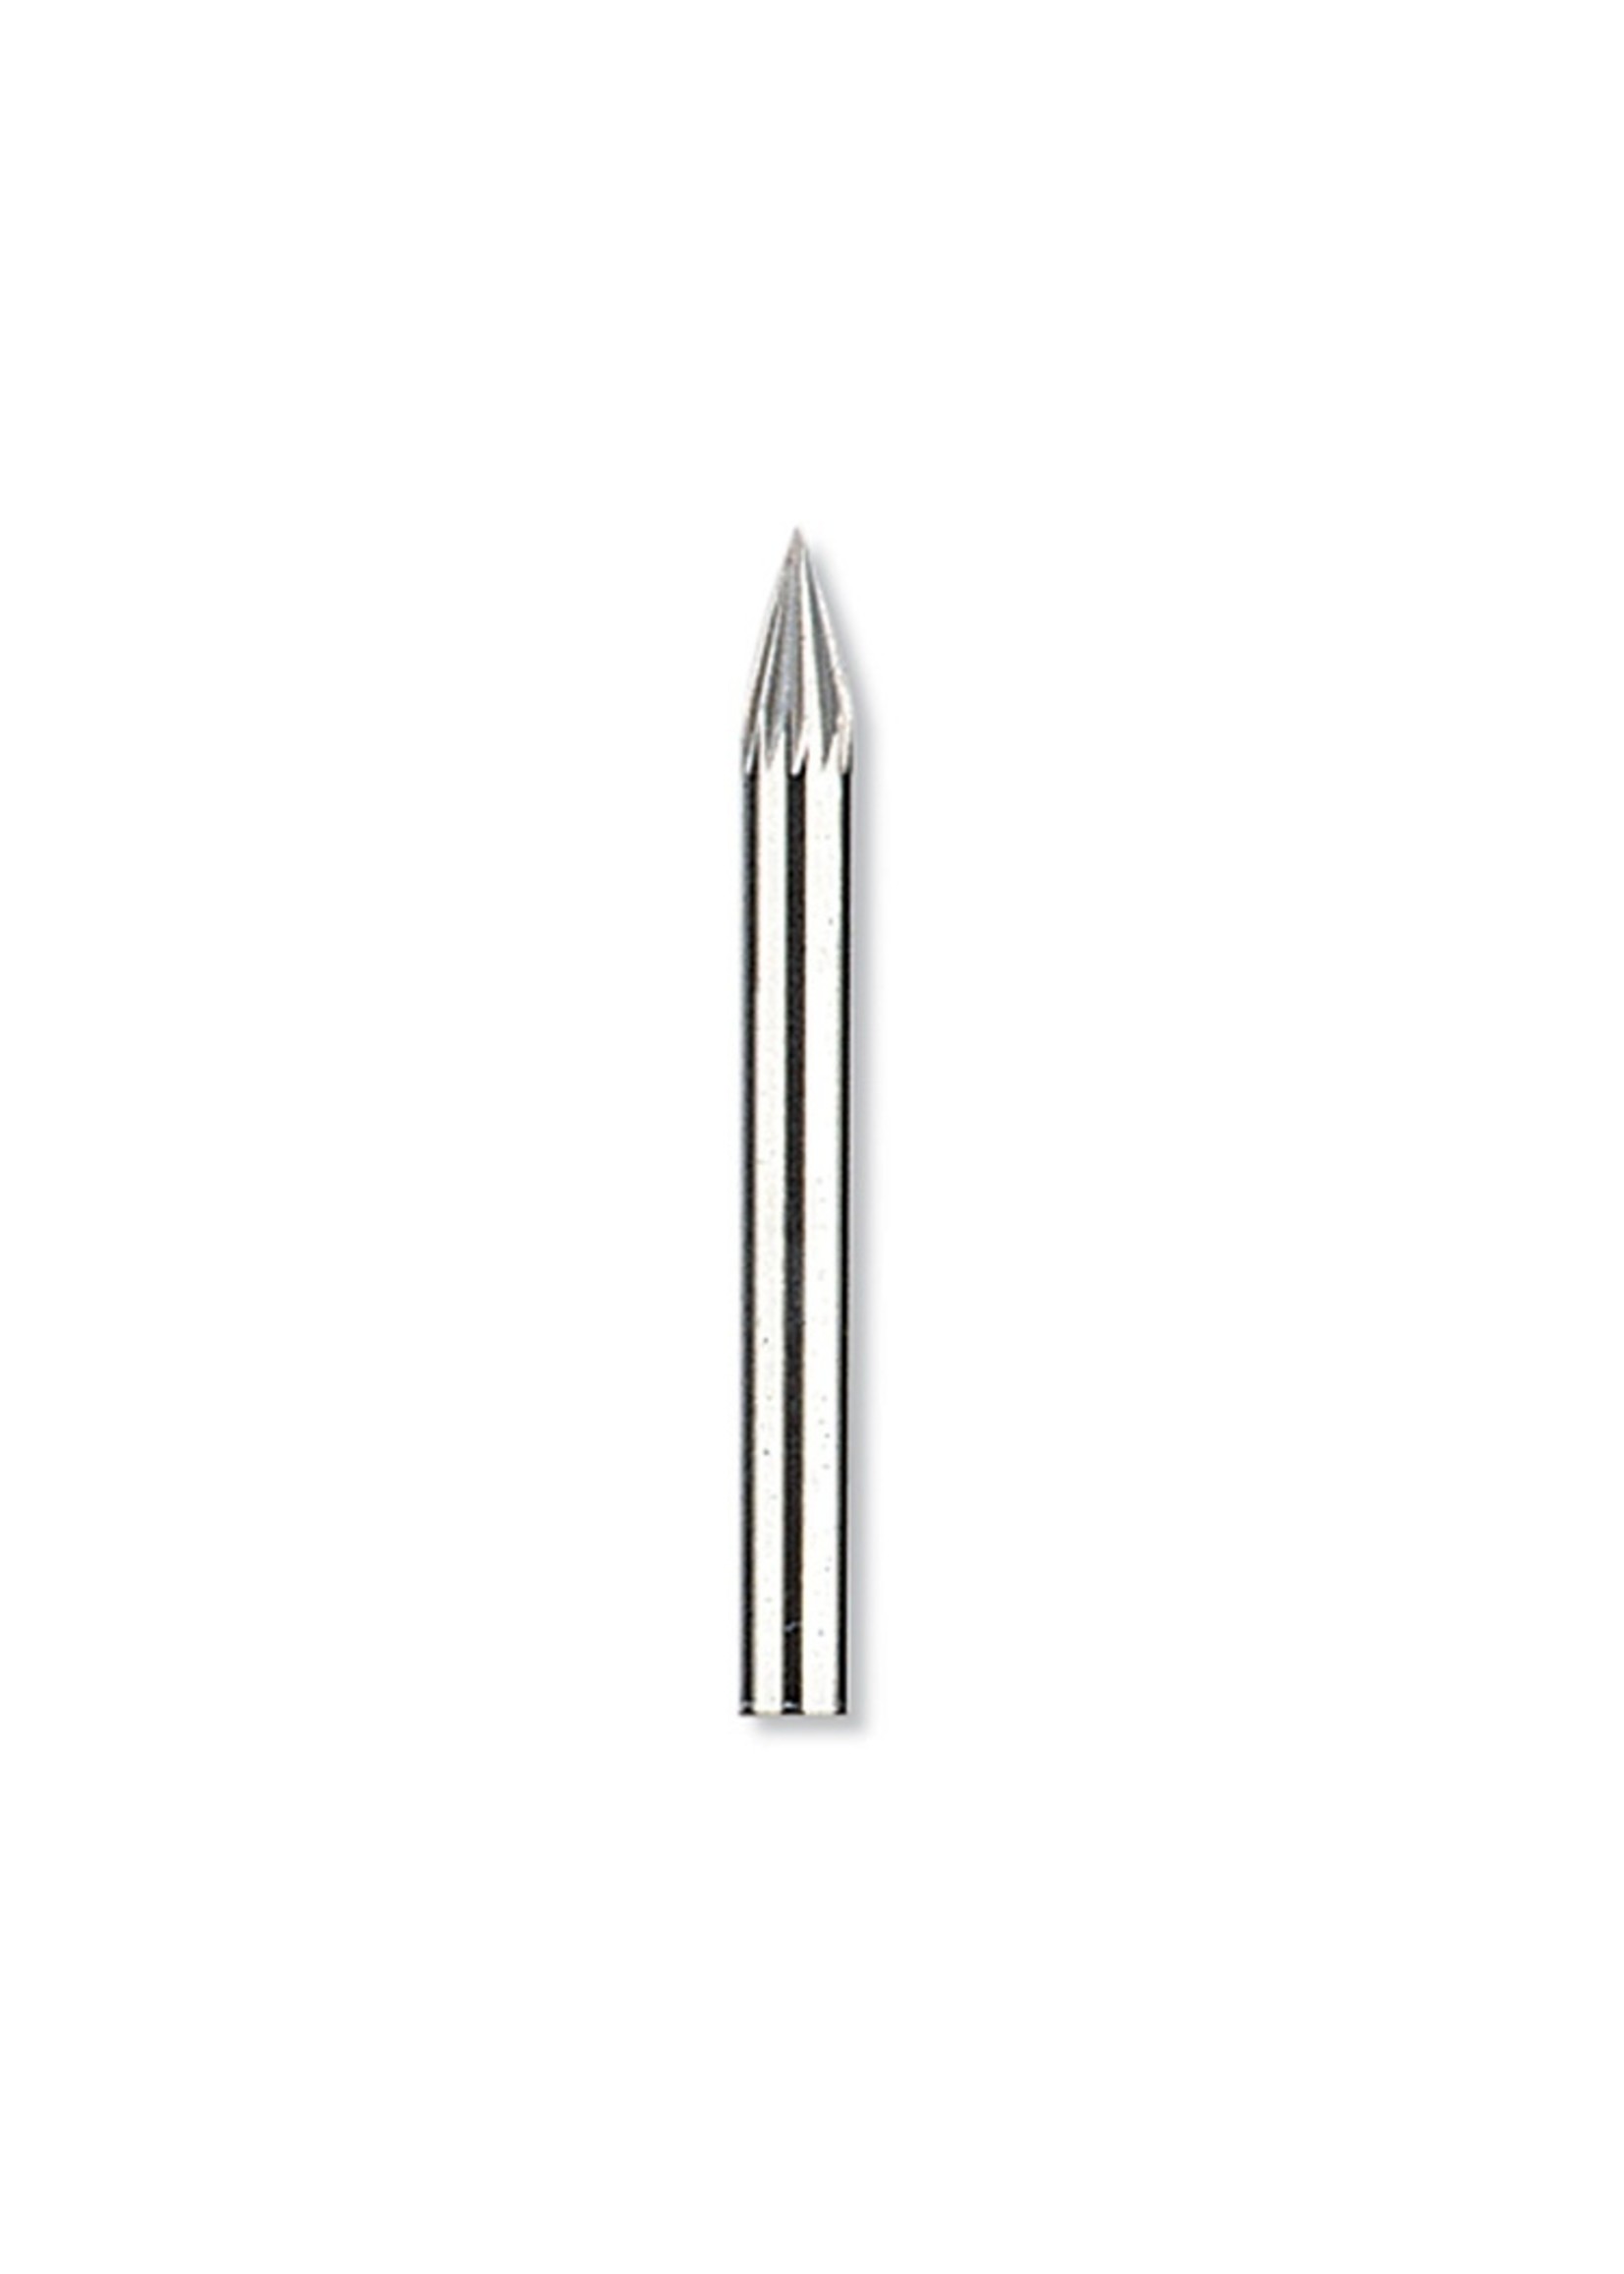 Dremel 9909 - 1/8" Tungsten Carbide Carving Bit